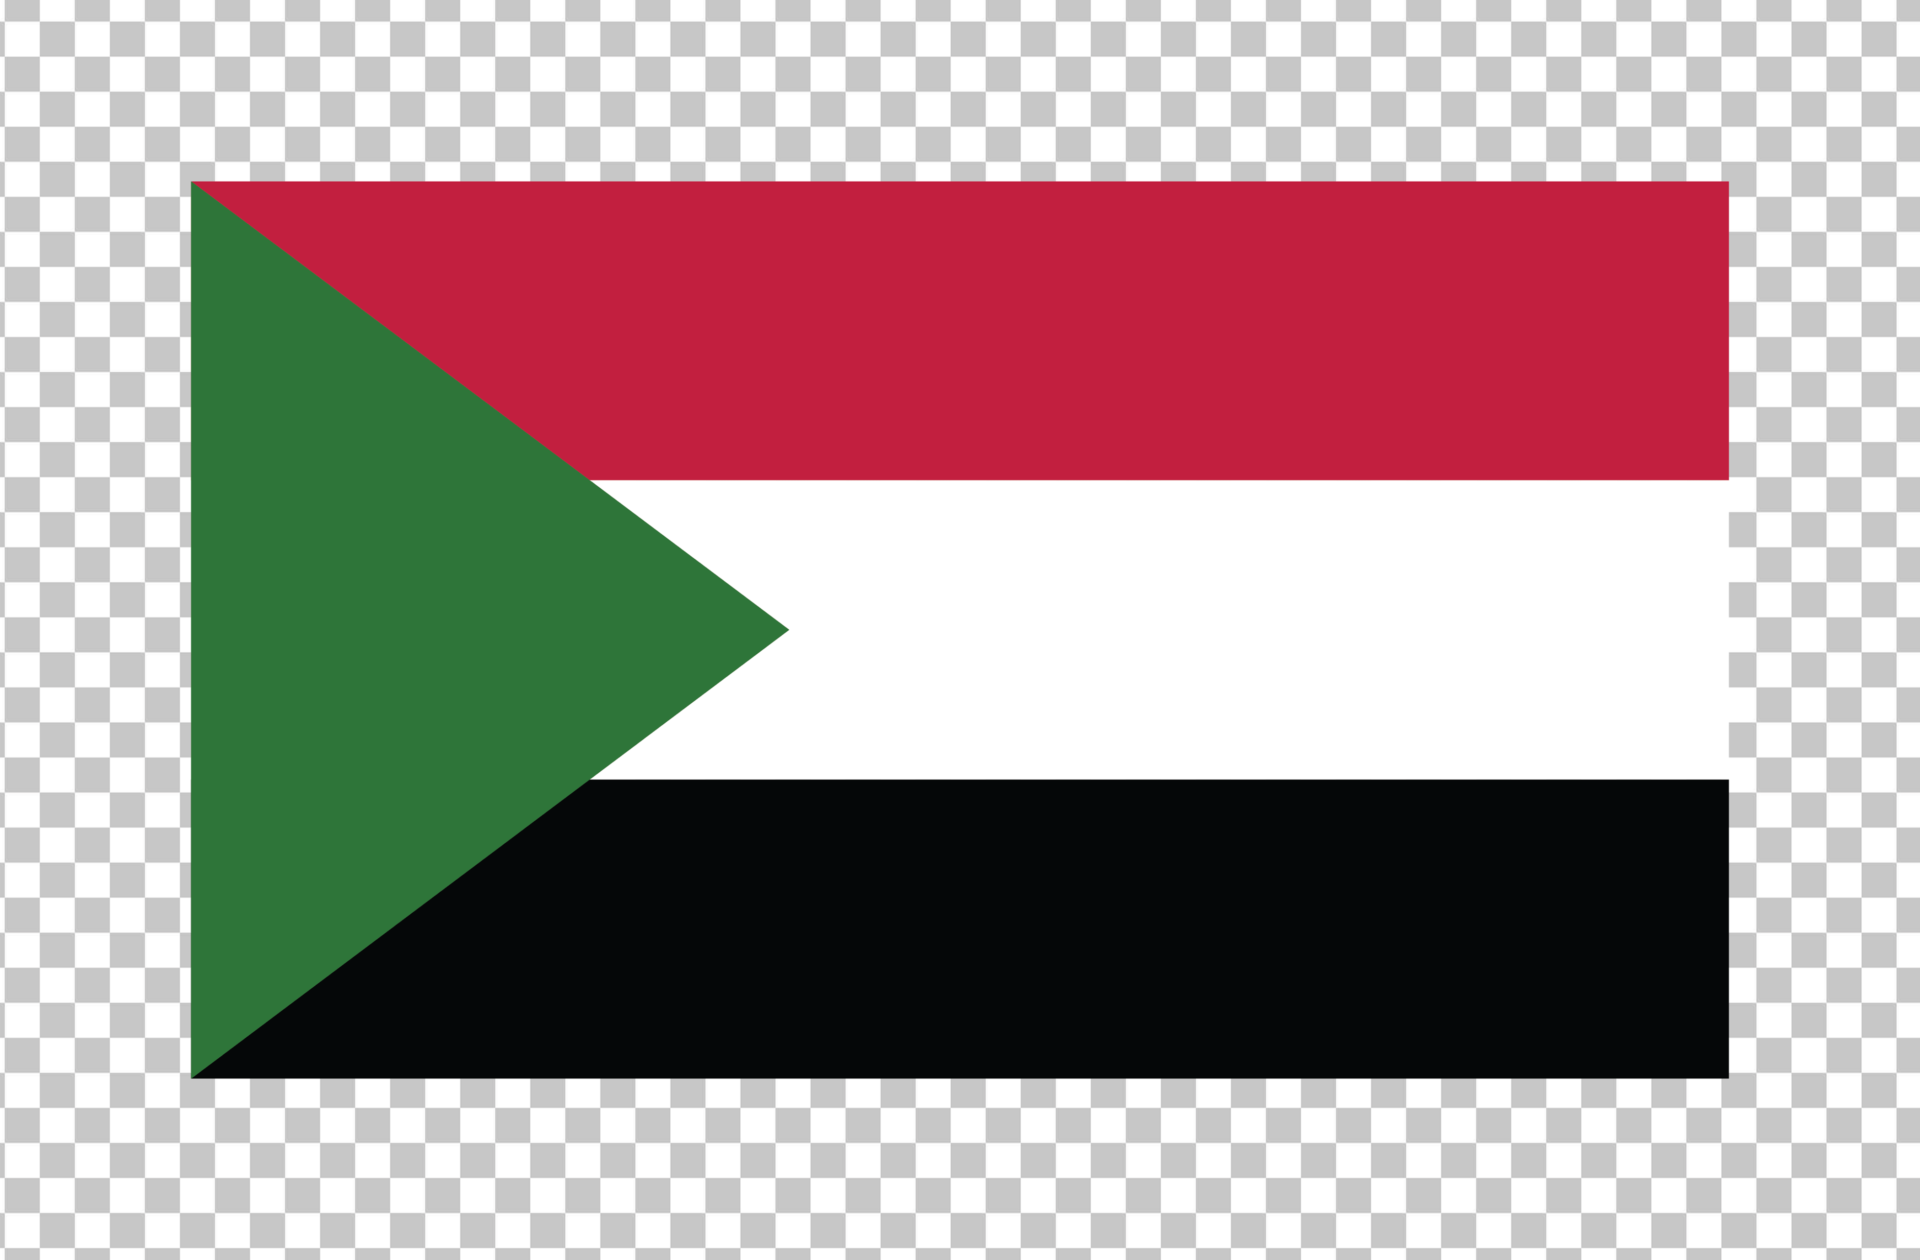 Flag of Sudan PNG Image